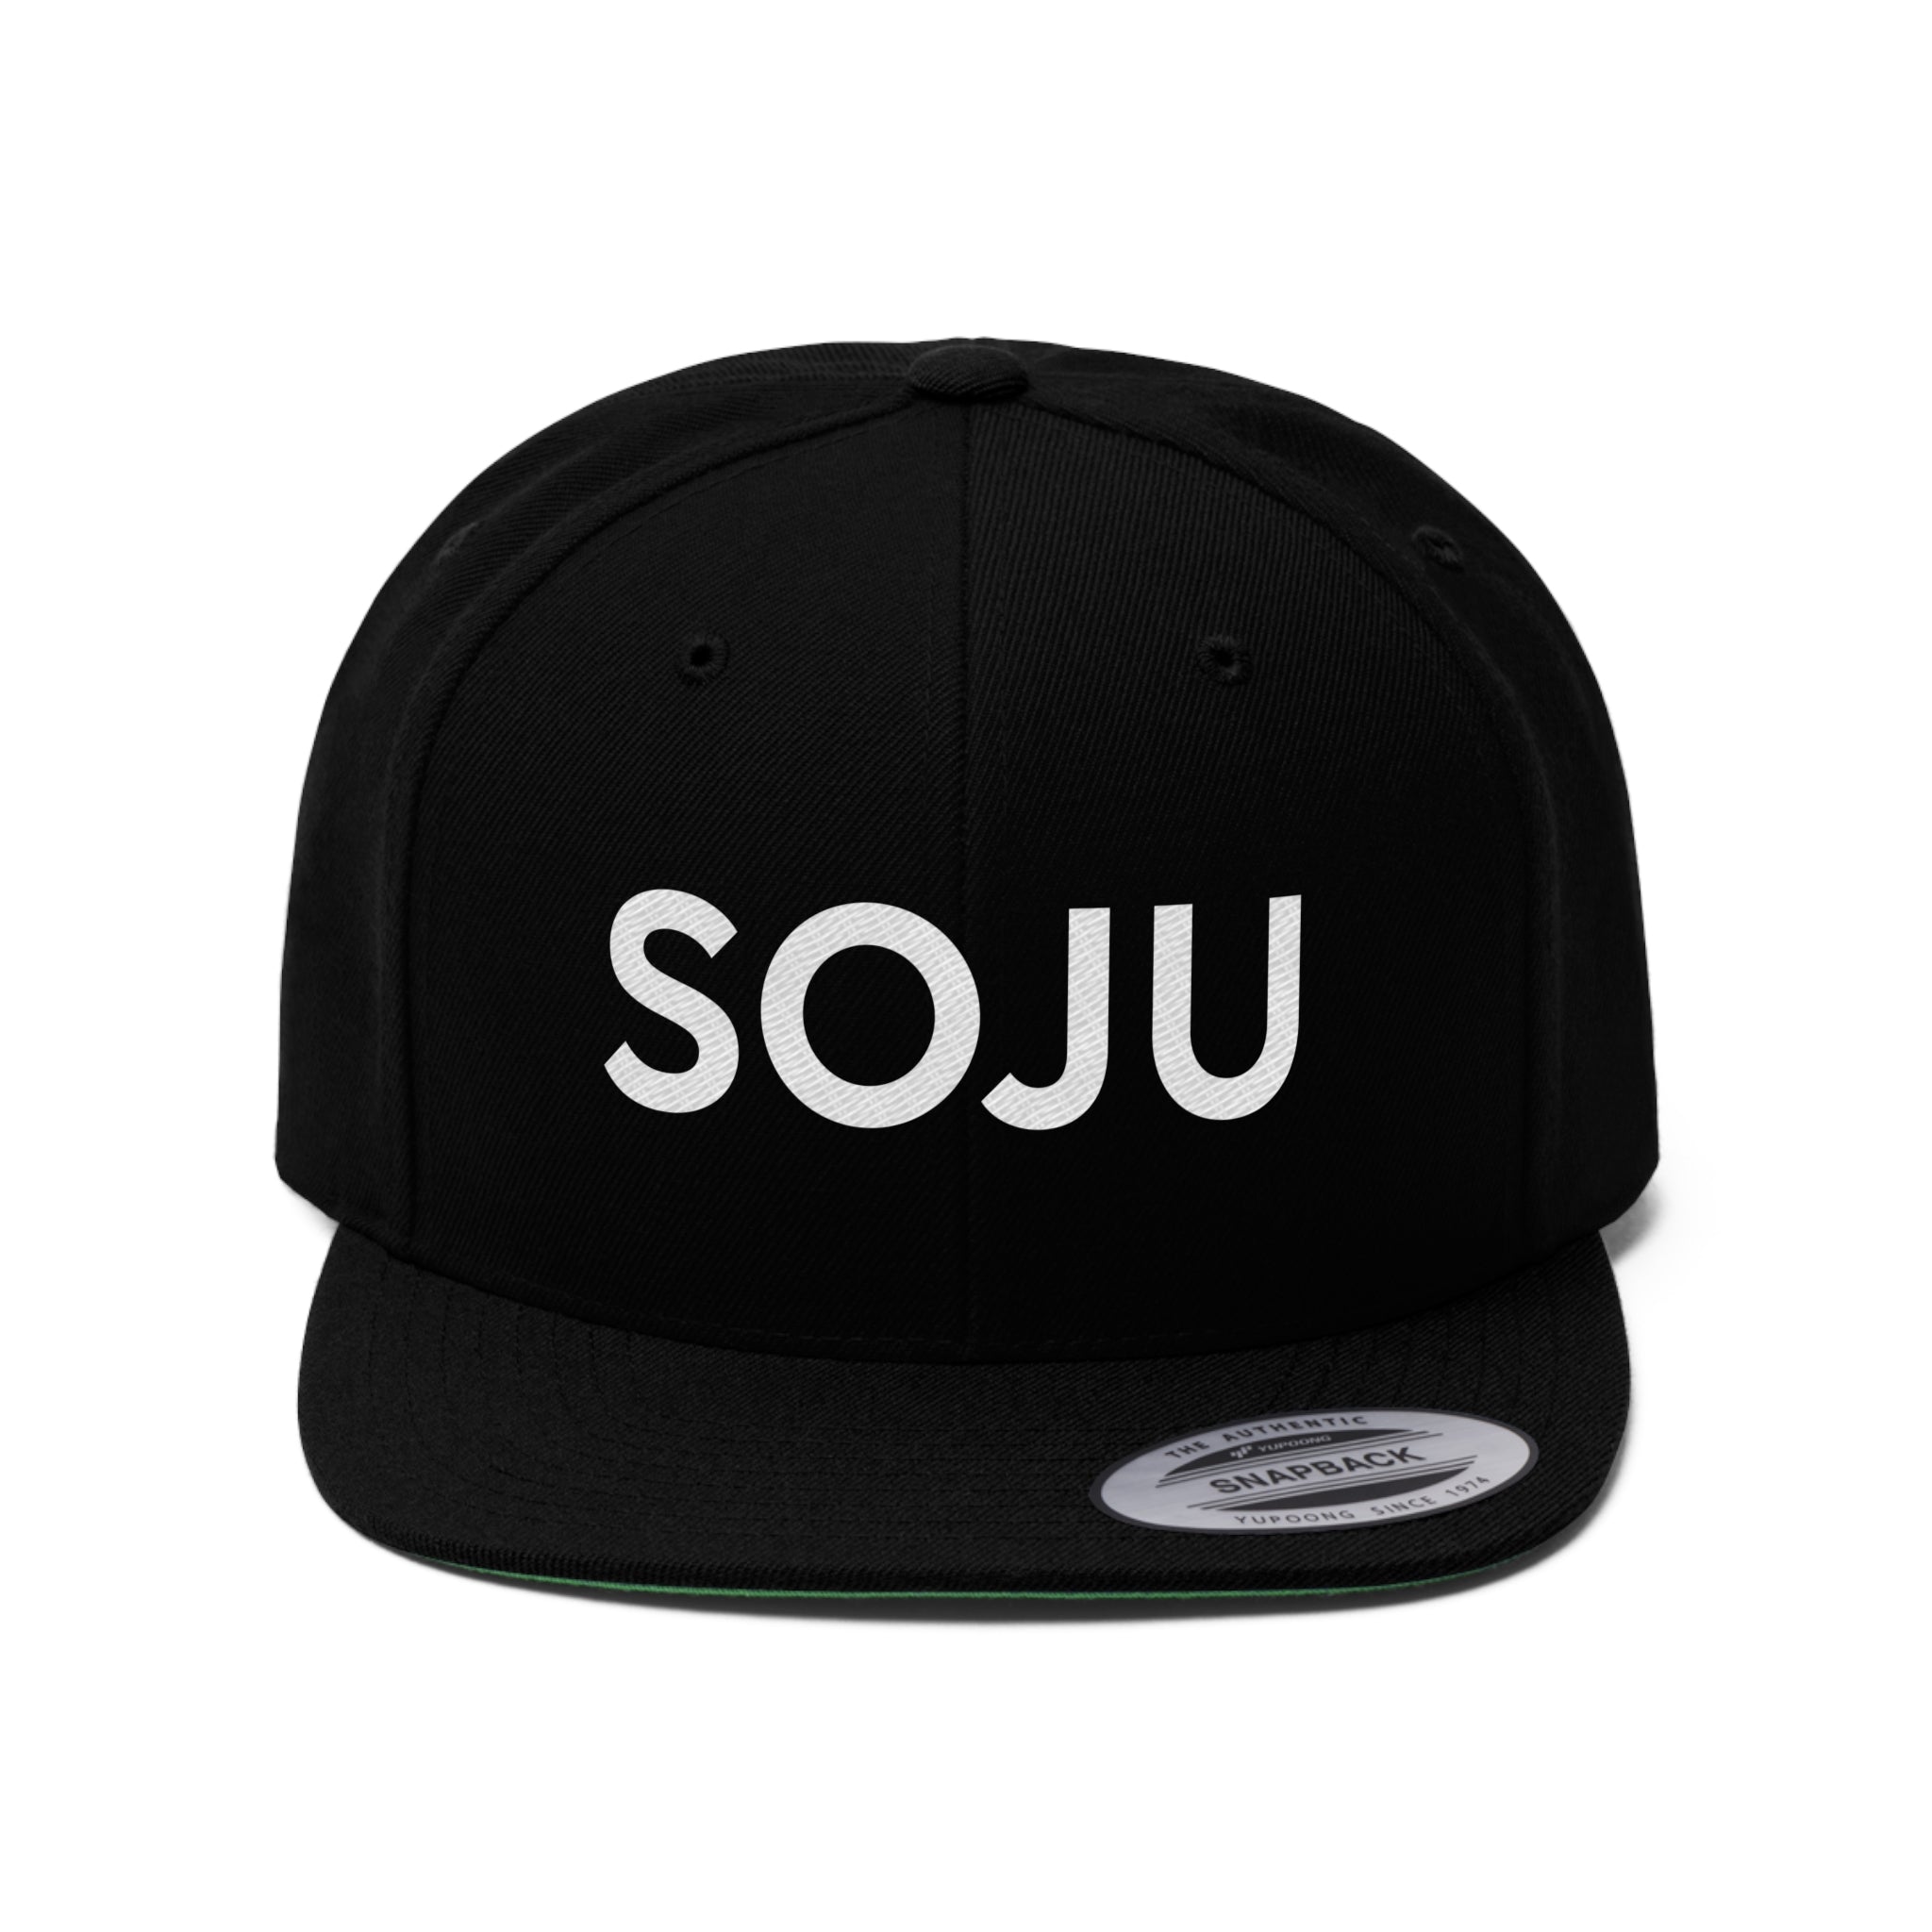 Soju Flat Bill Hat in Black